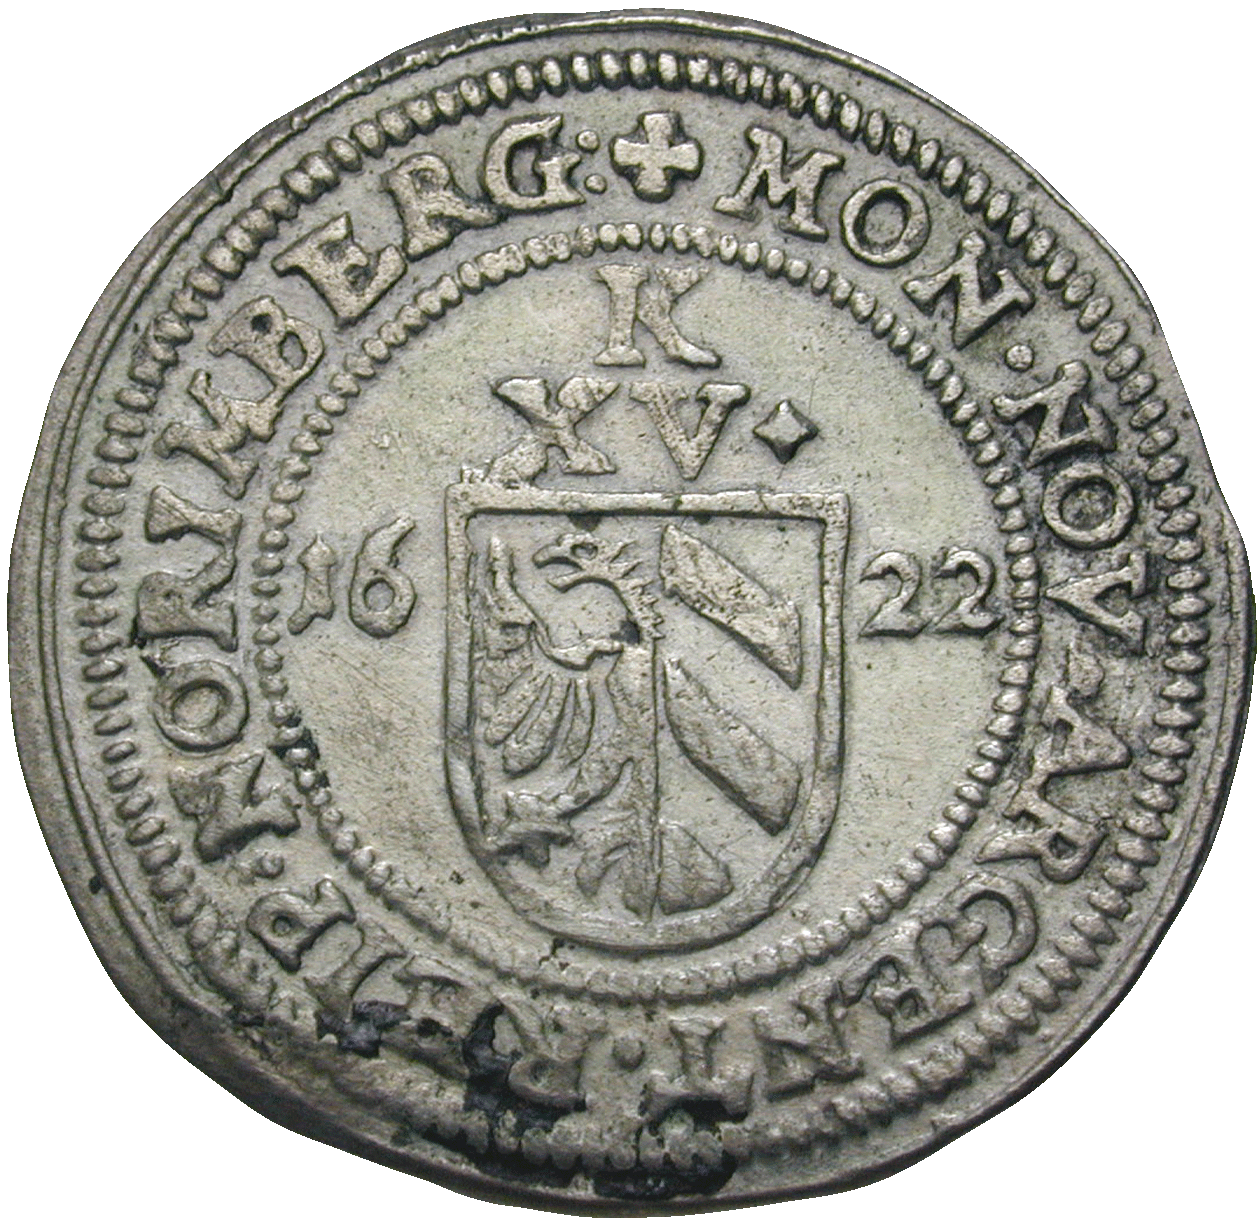 Holy Roman Empire, City of Nuremberg, Kipper worth 15 Kreuzer 1622 (obverse)